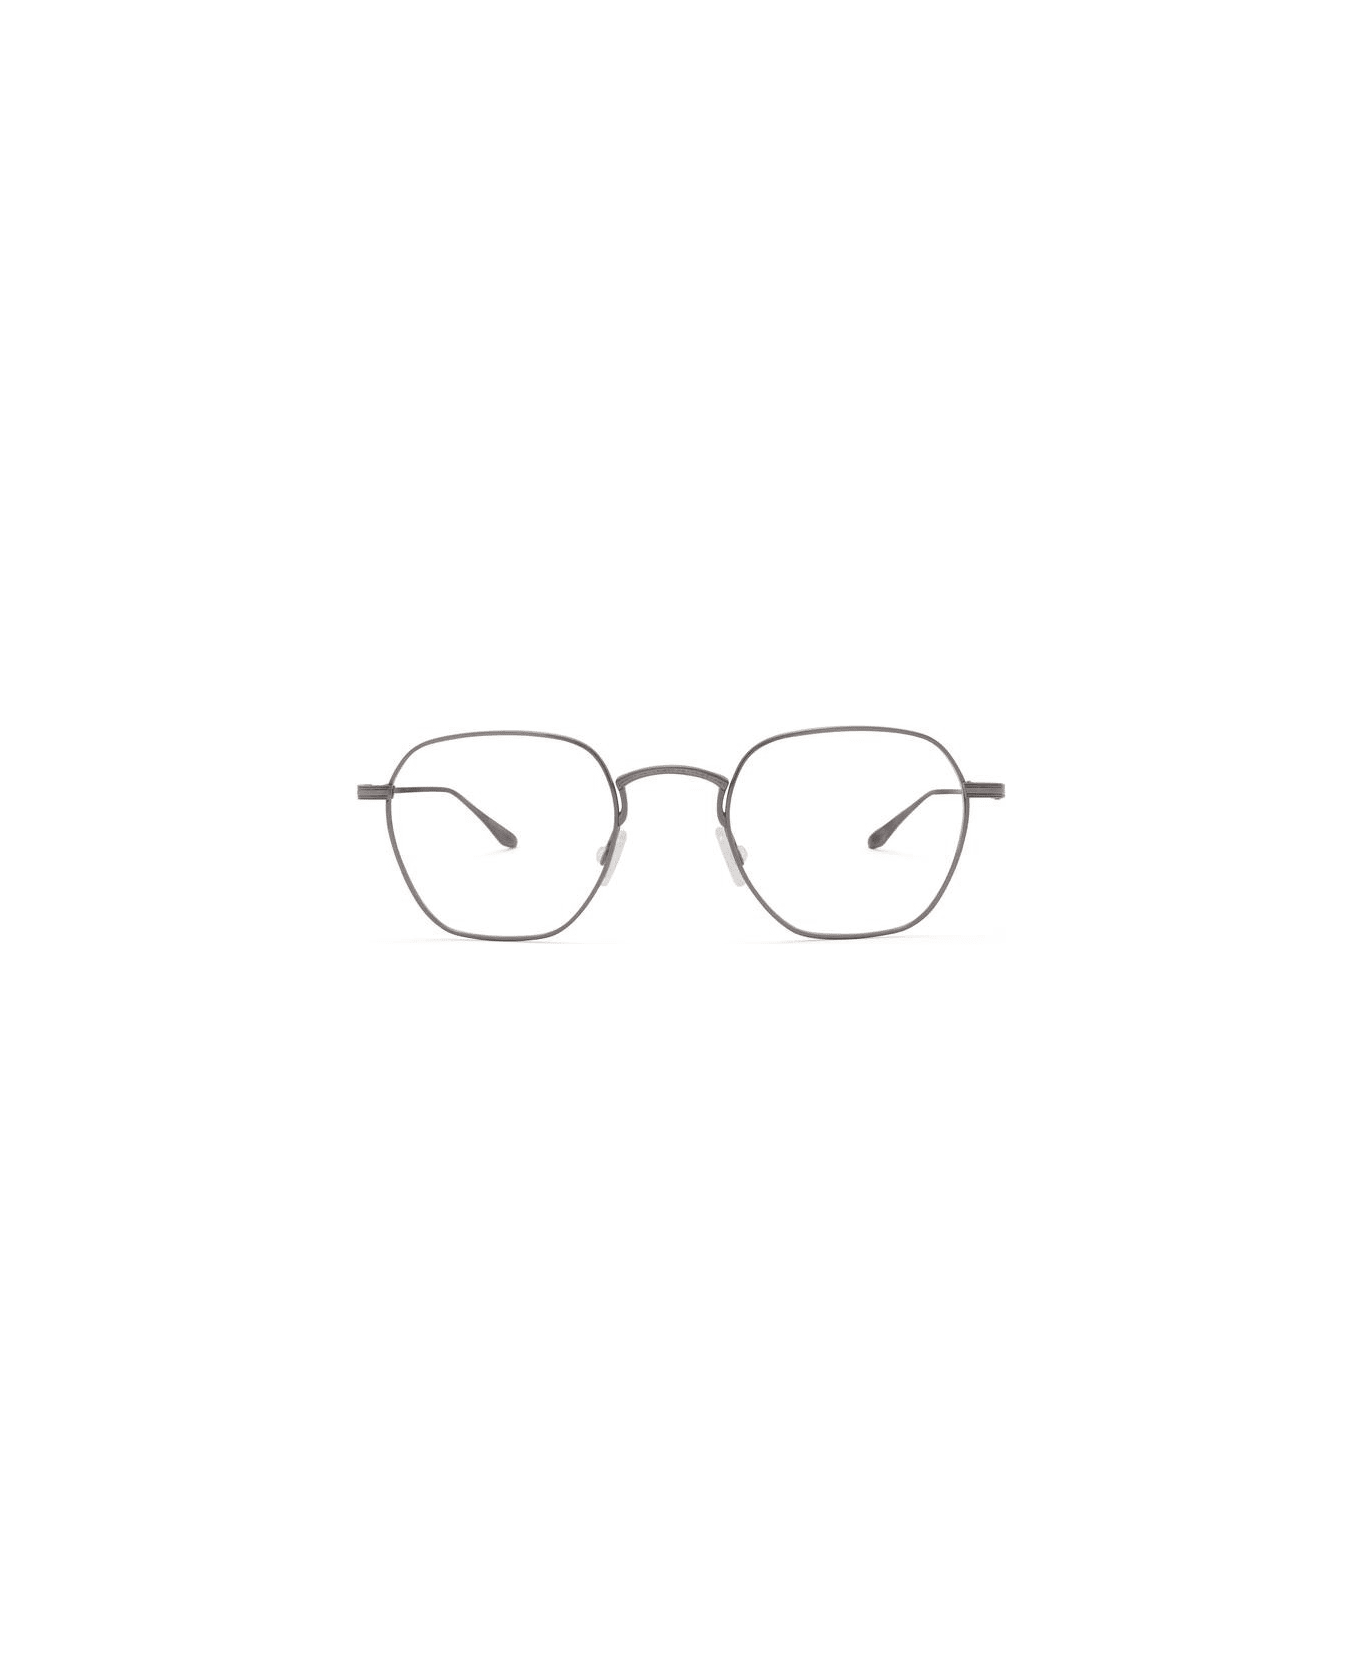 Barton Perreira Bp5038 Glasses - Grigio アイウェア